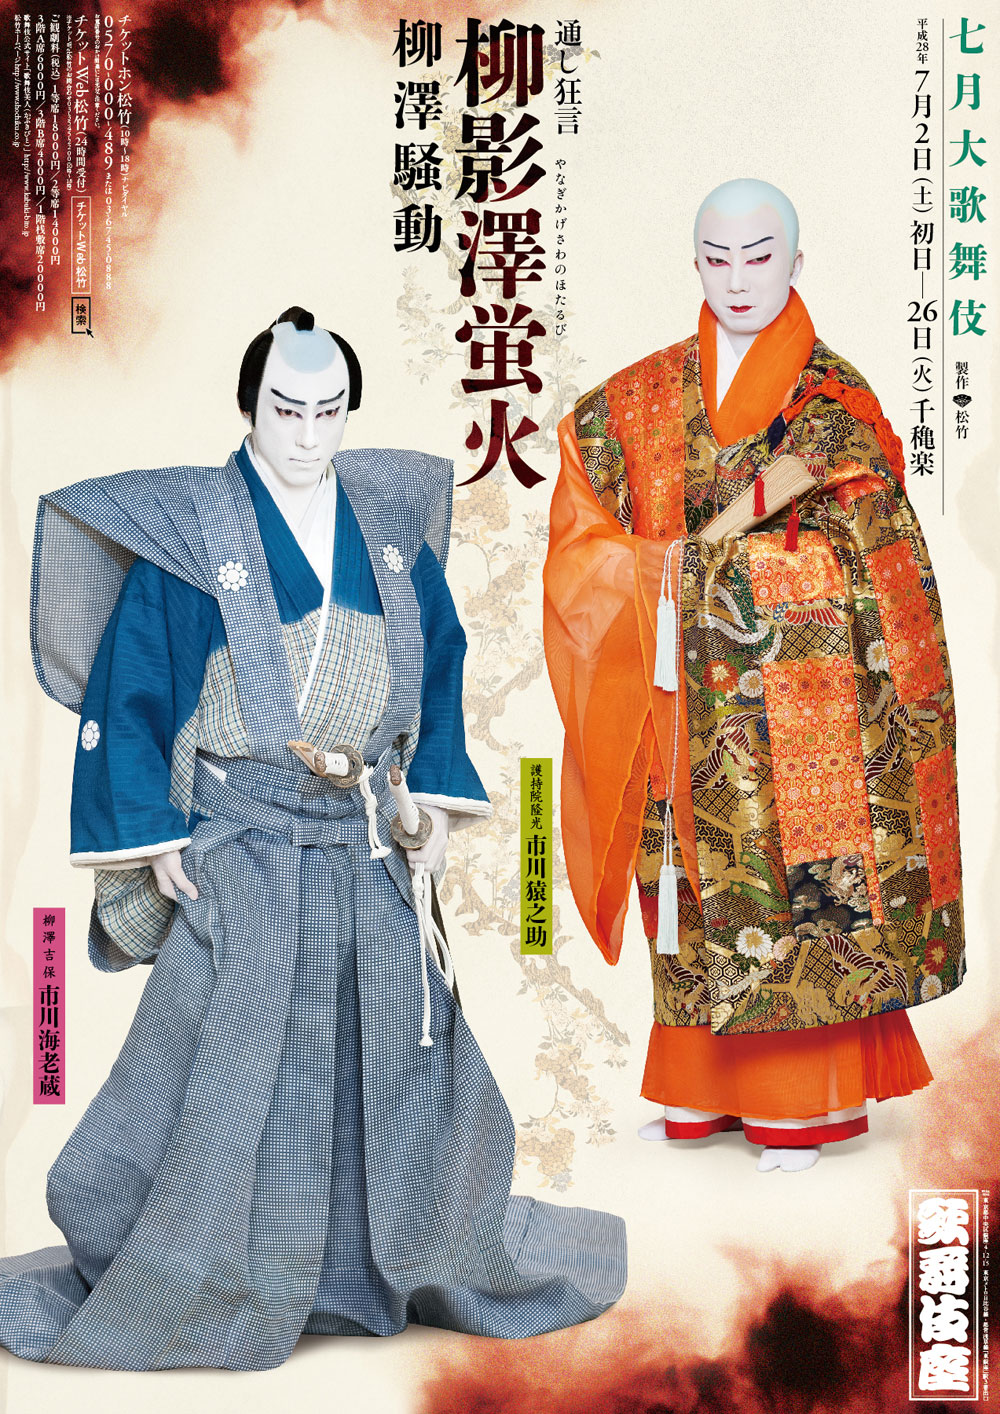 歌舞伎座「七月大歌舞伎」昼の部の特別ポスター公開